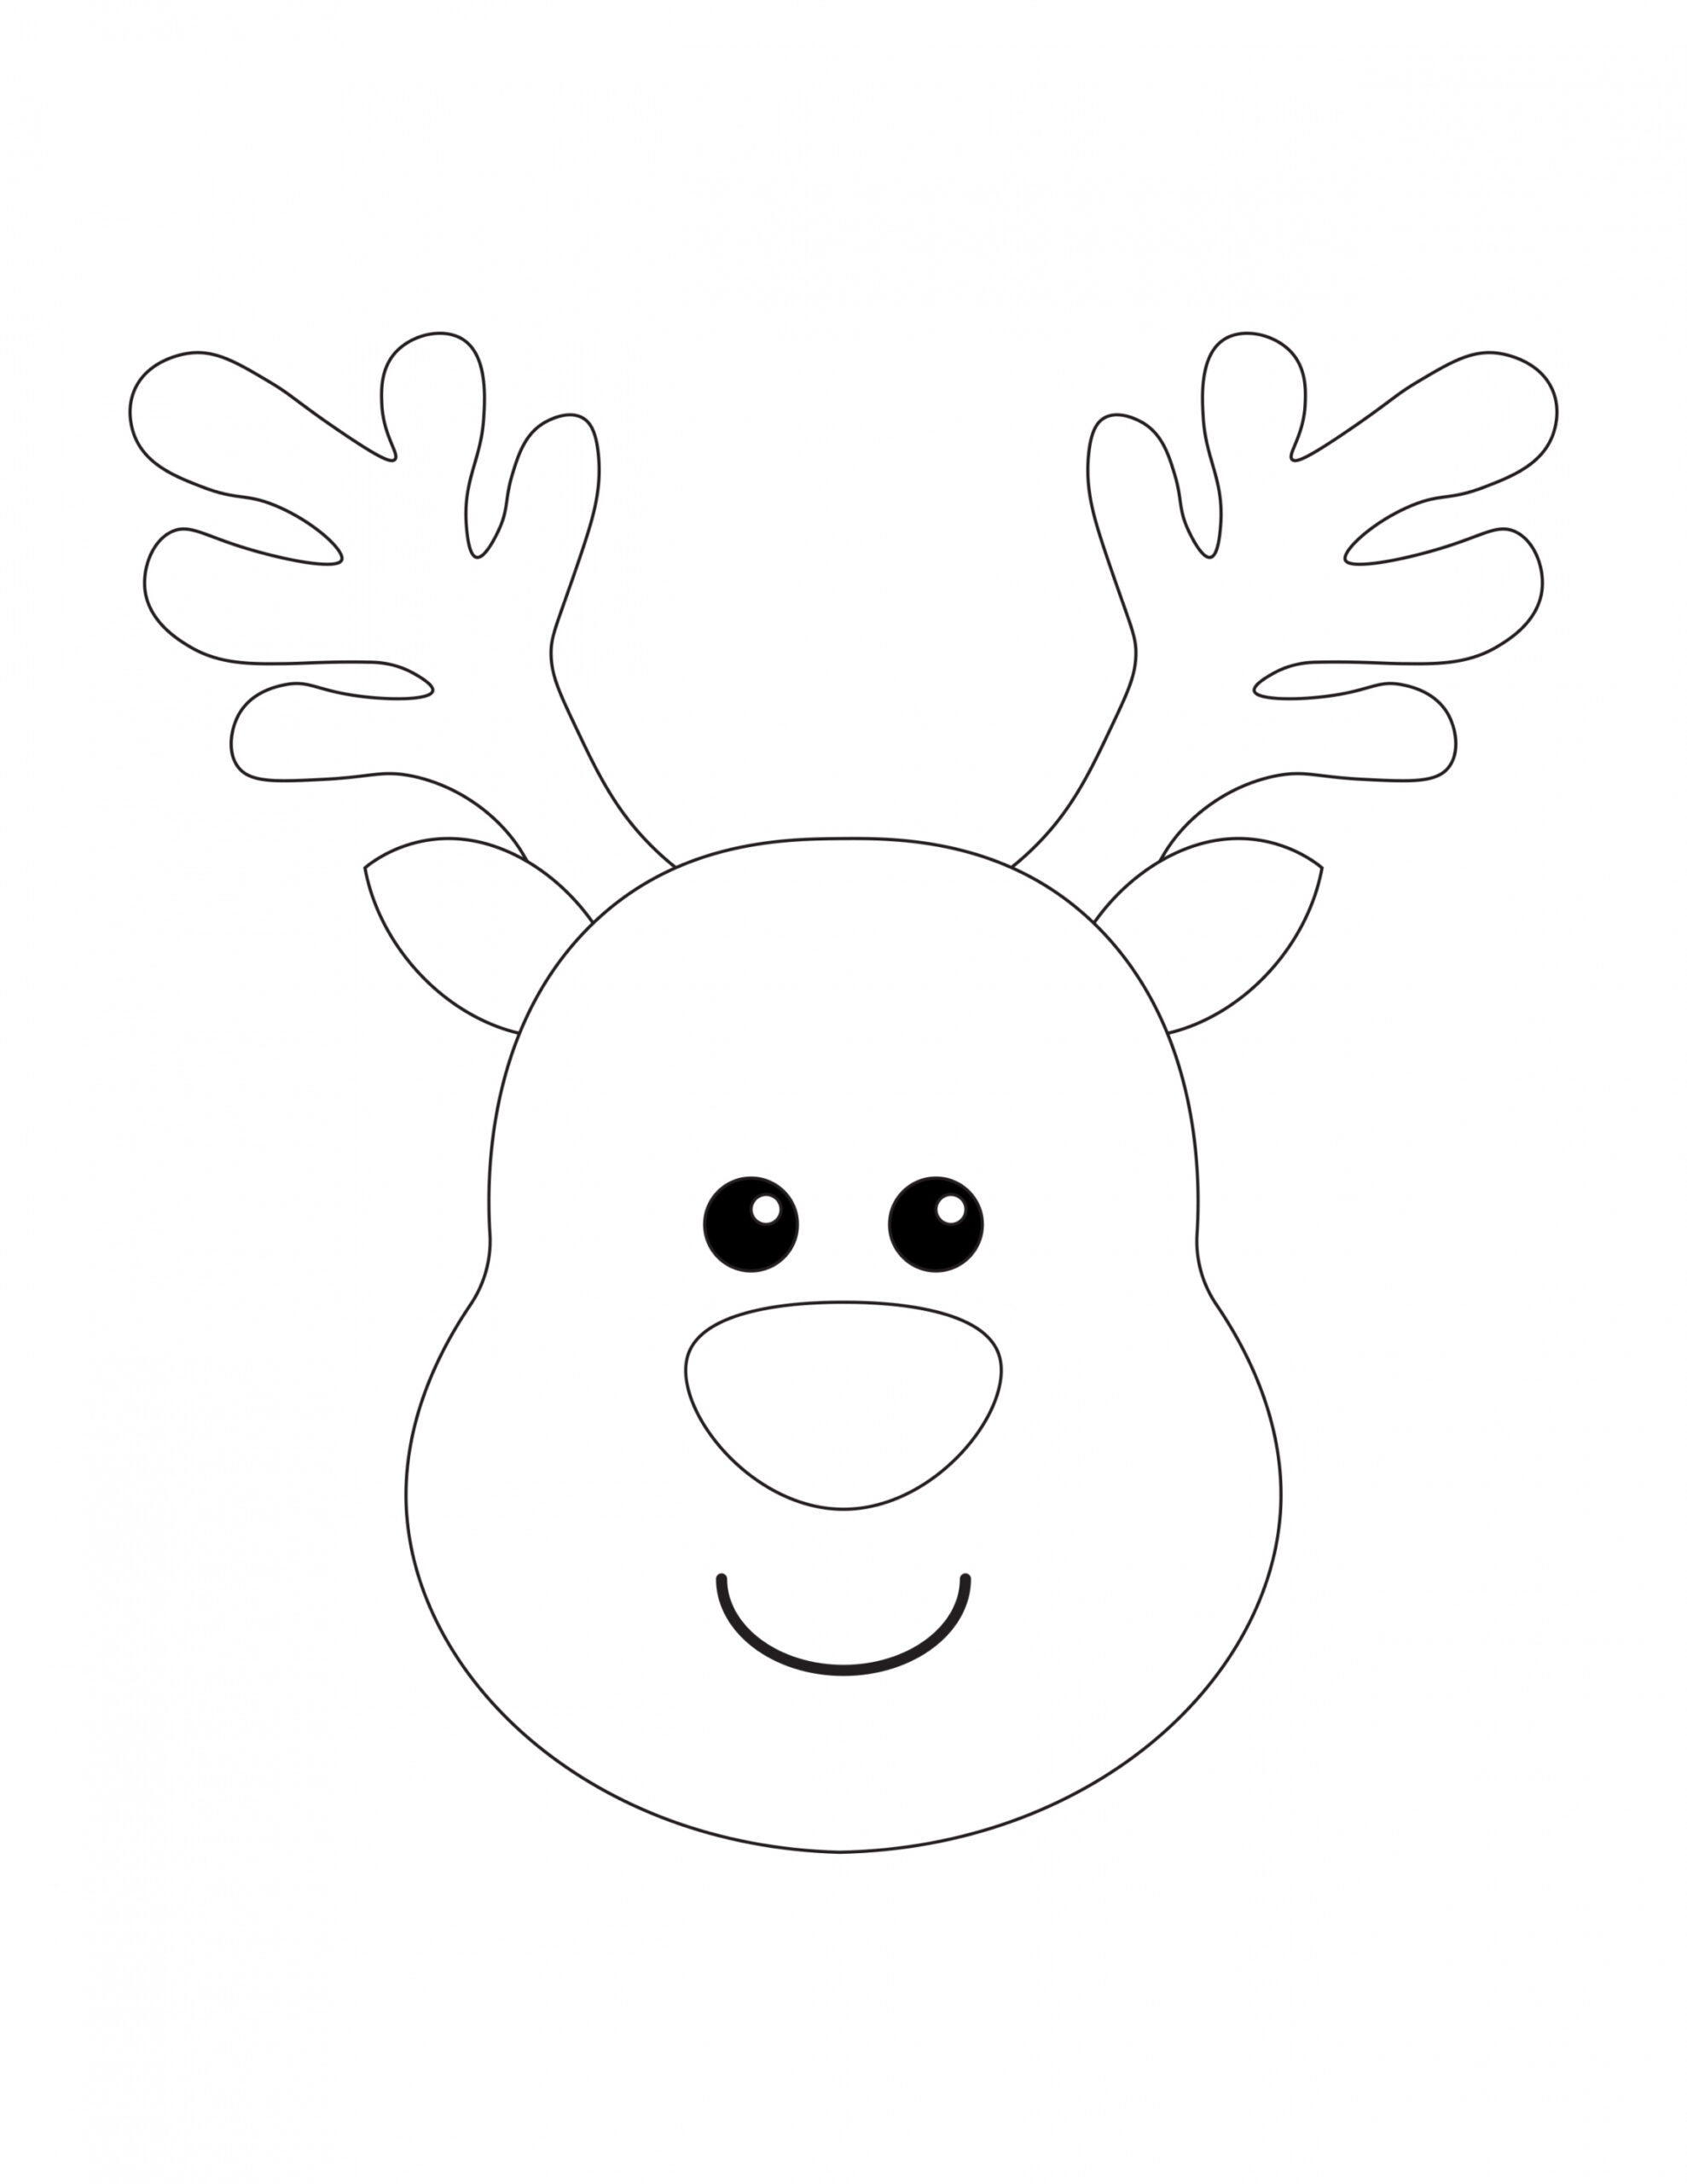 Free Printable Reindeer Templates - Daily Printables - FREE Printables - Reindeer Printable Template